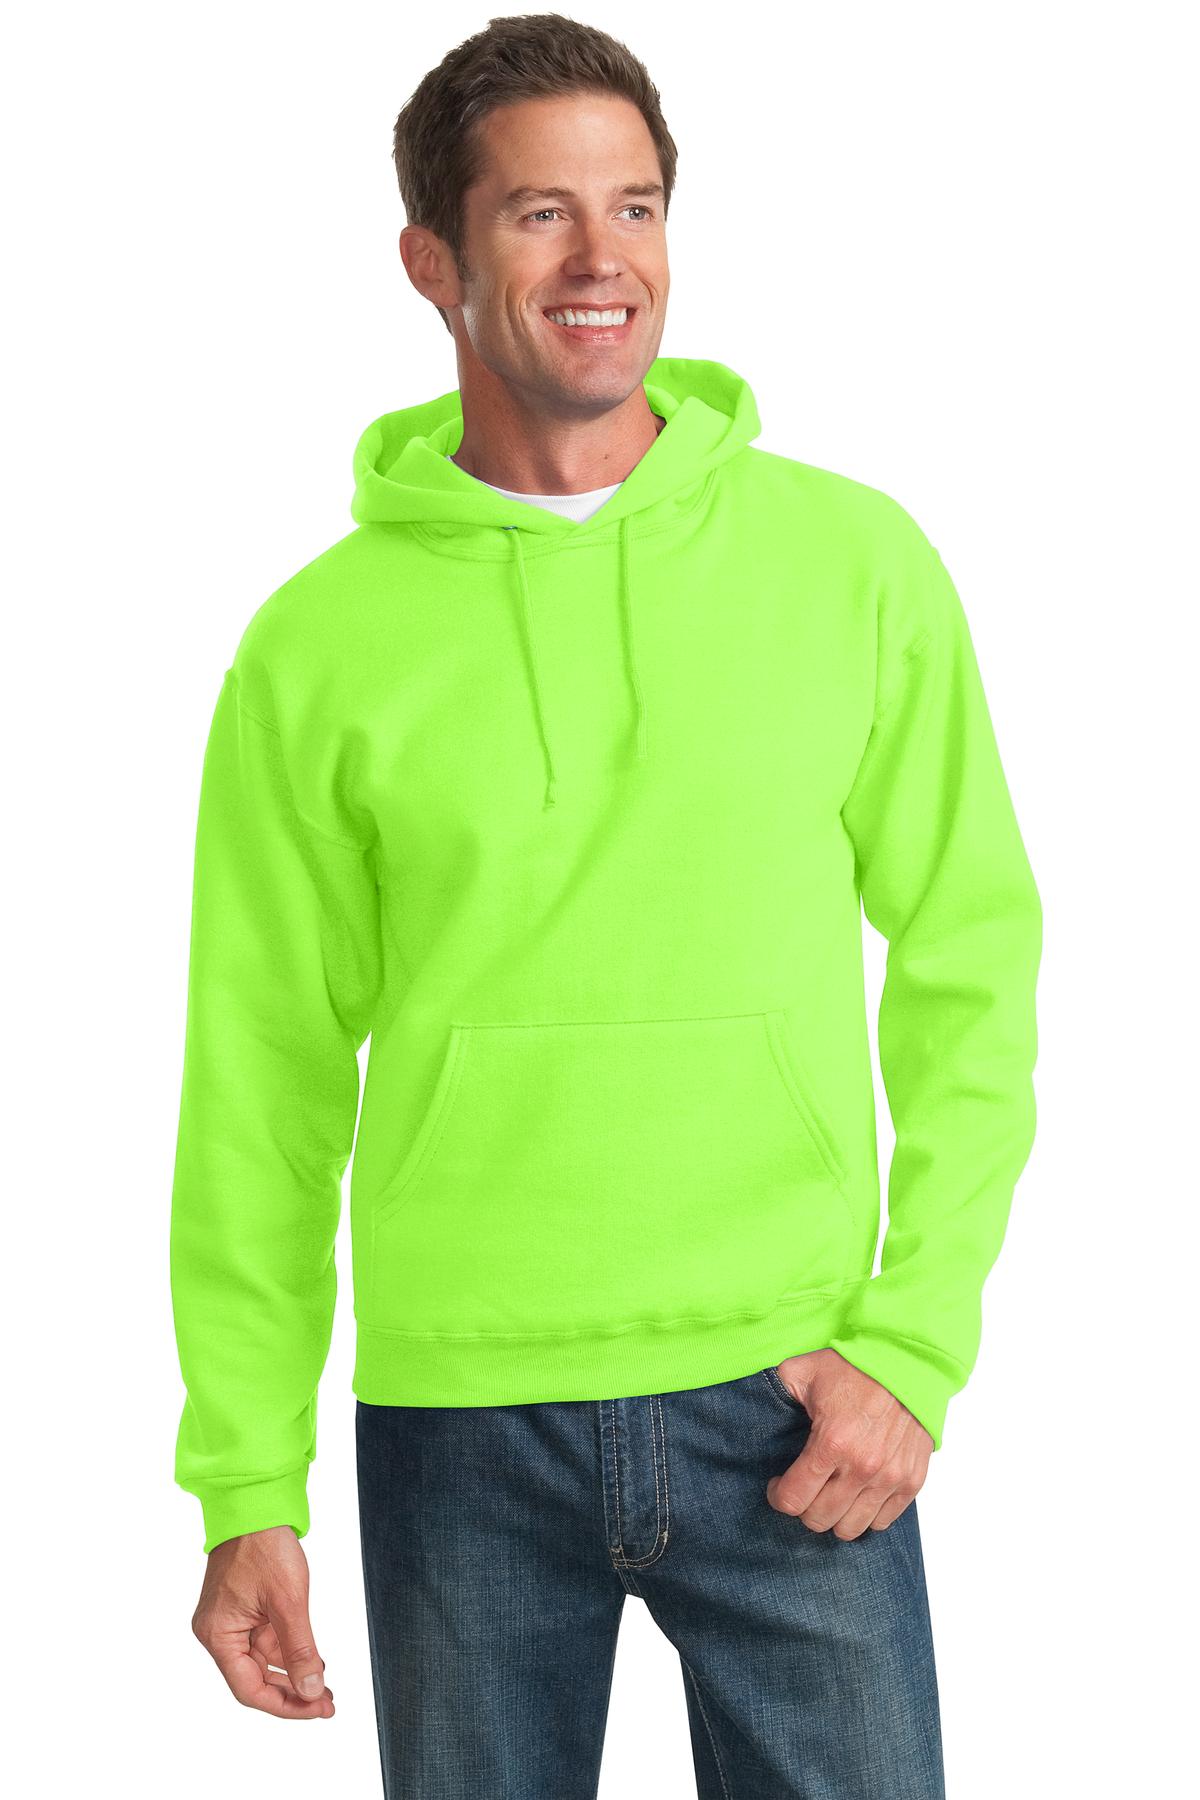 JERZEES® - NuBlend® Pullover Hooded Sweatshirt. 996M [Neon Green] - DFW Impression